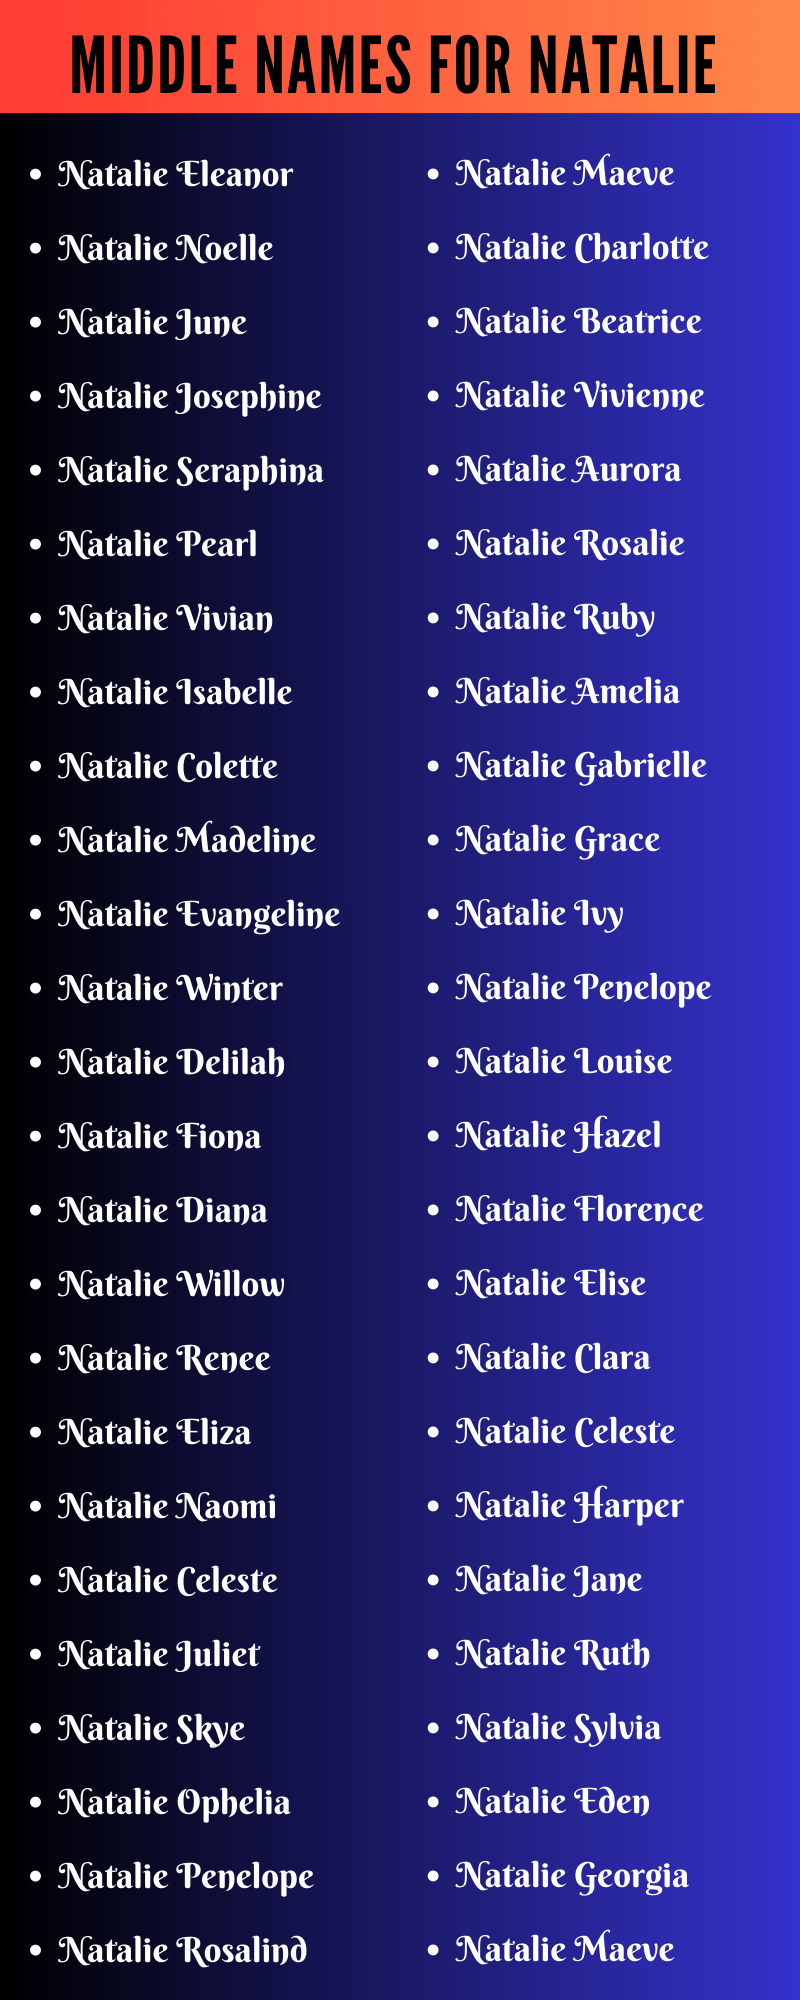 Middle Names For Natalie